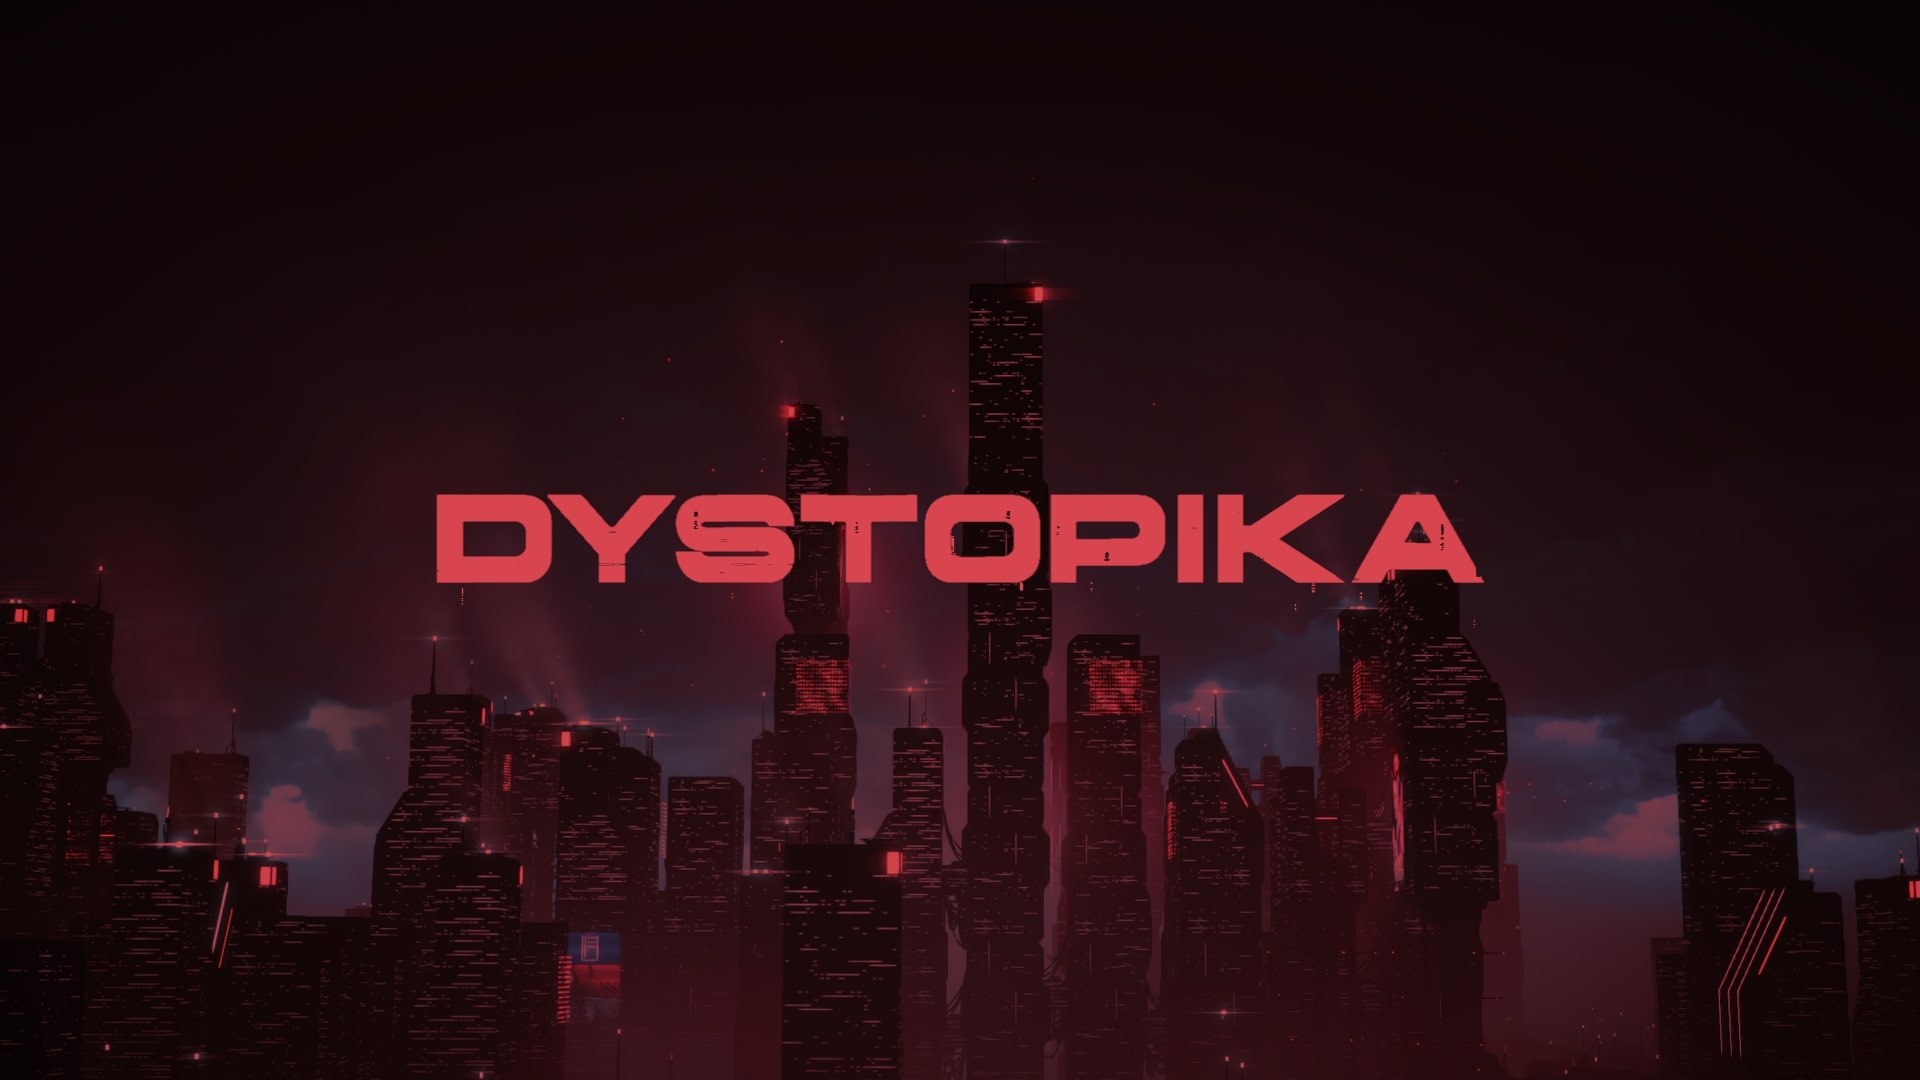 Dystopika